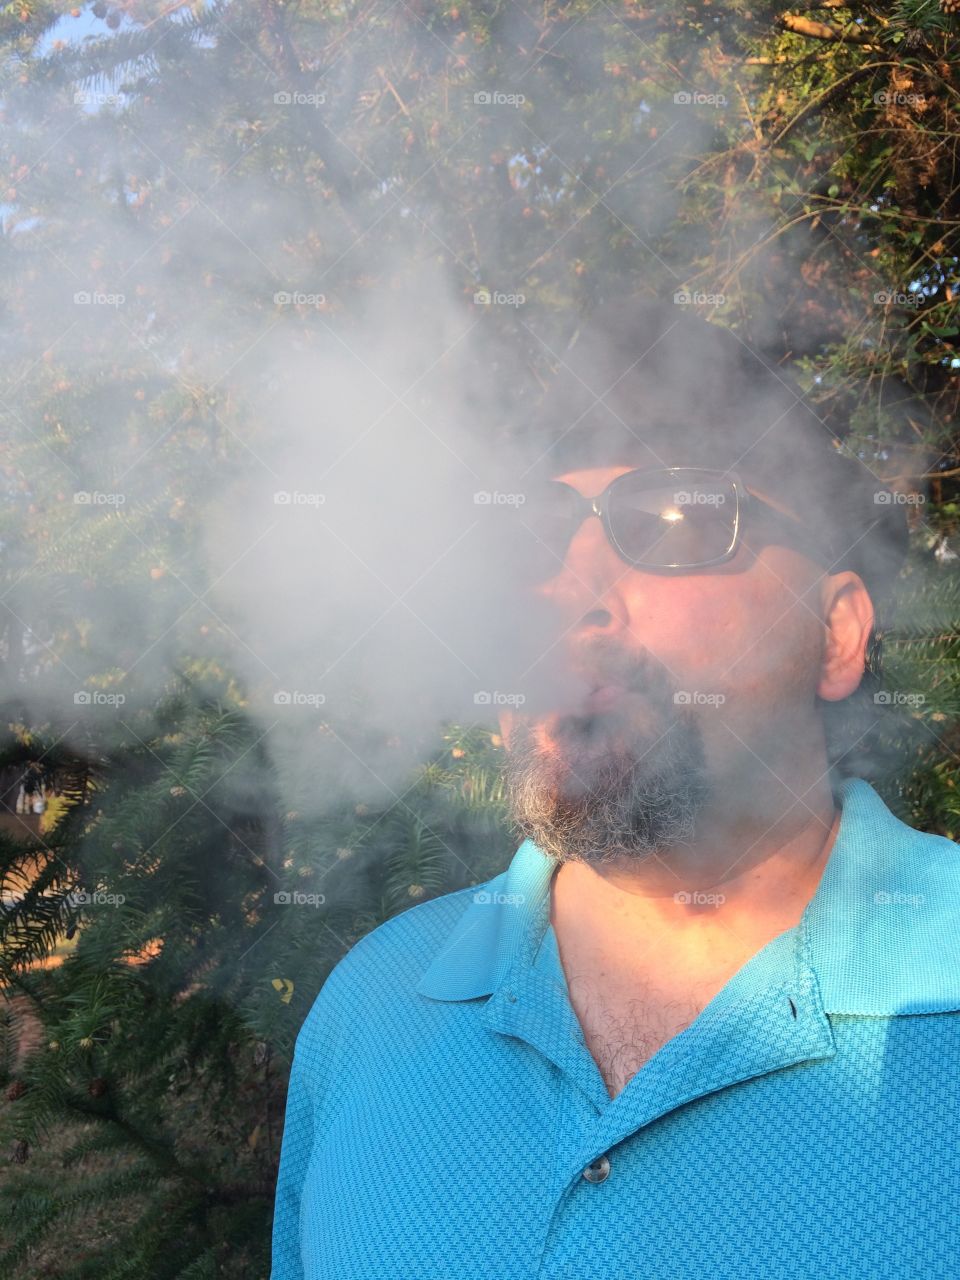 Smokey man